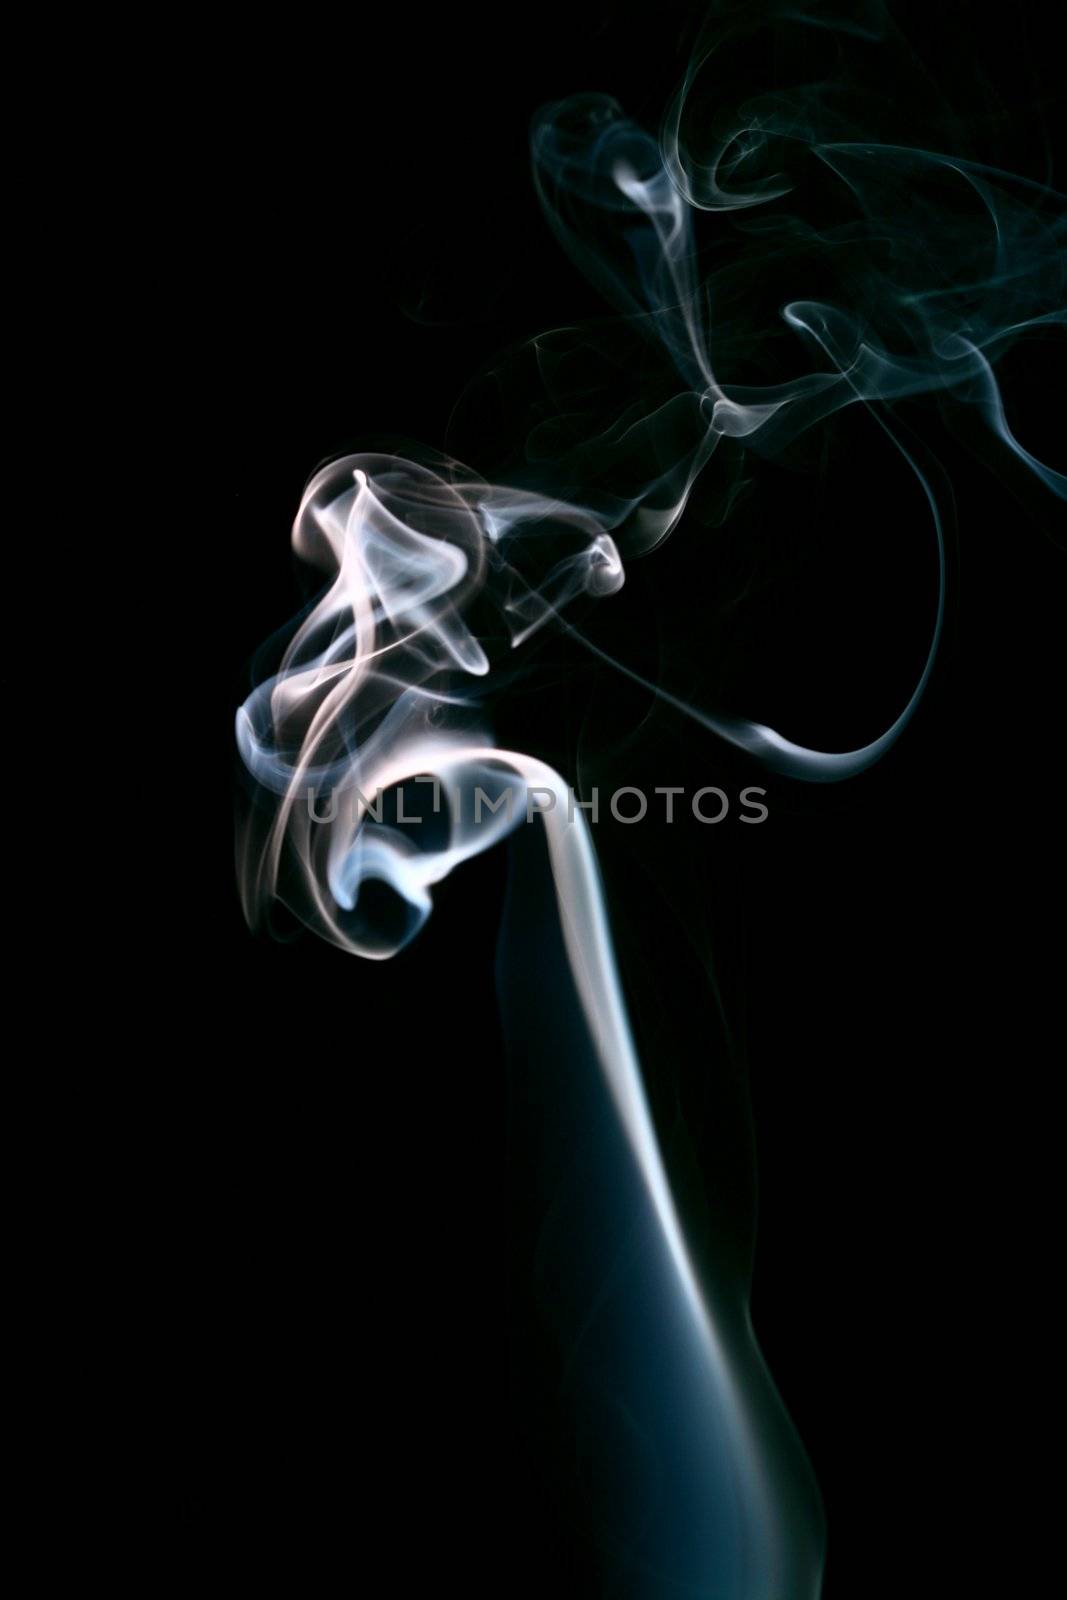 smoke by Yellowj